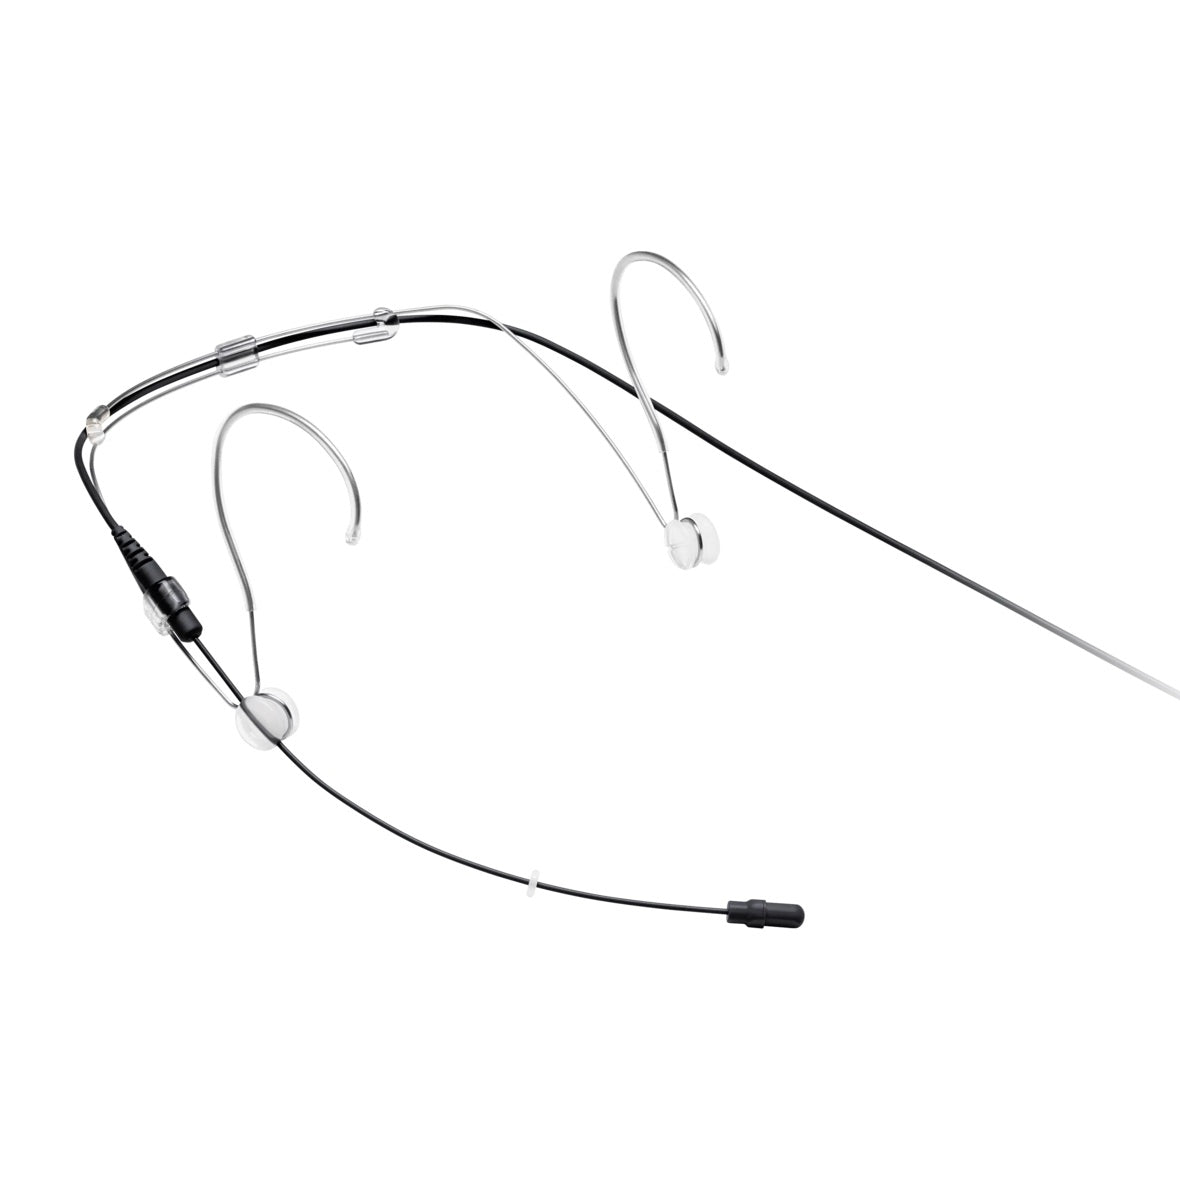 Shure DH5 - DuraPlex Omnidirectional Subminiature Headset Microphone, black